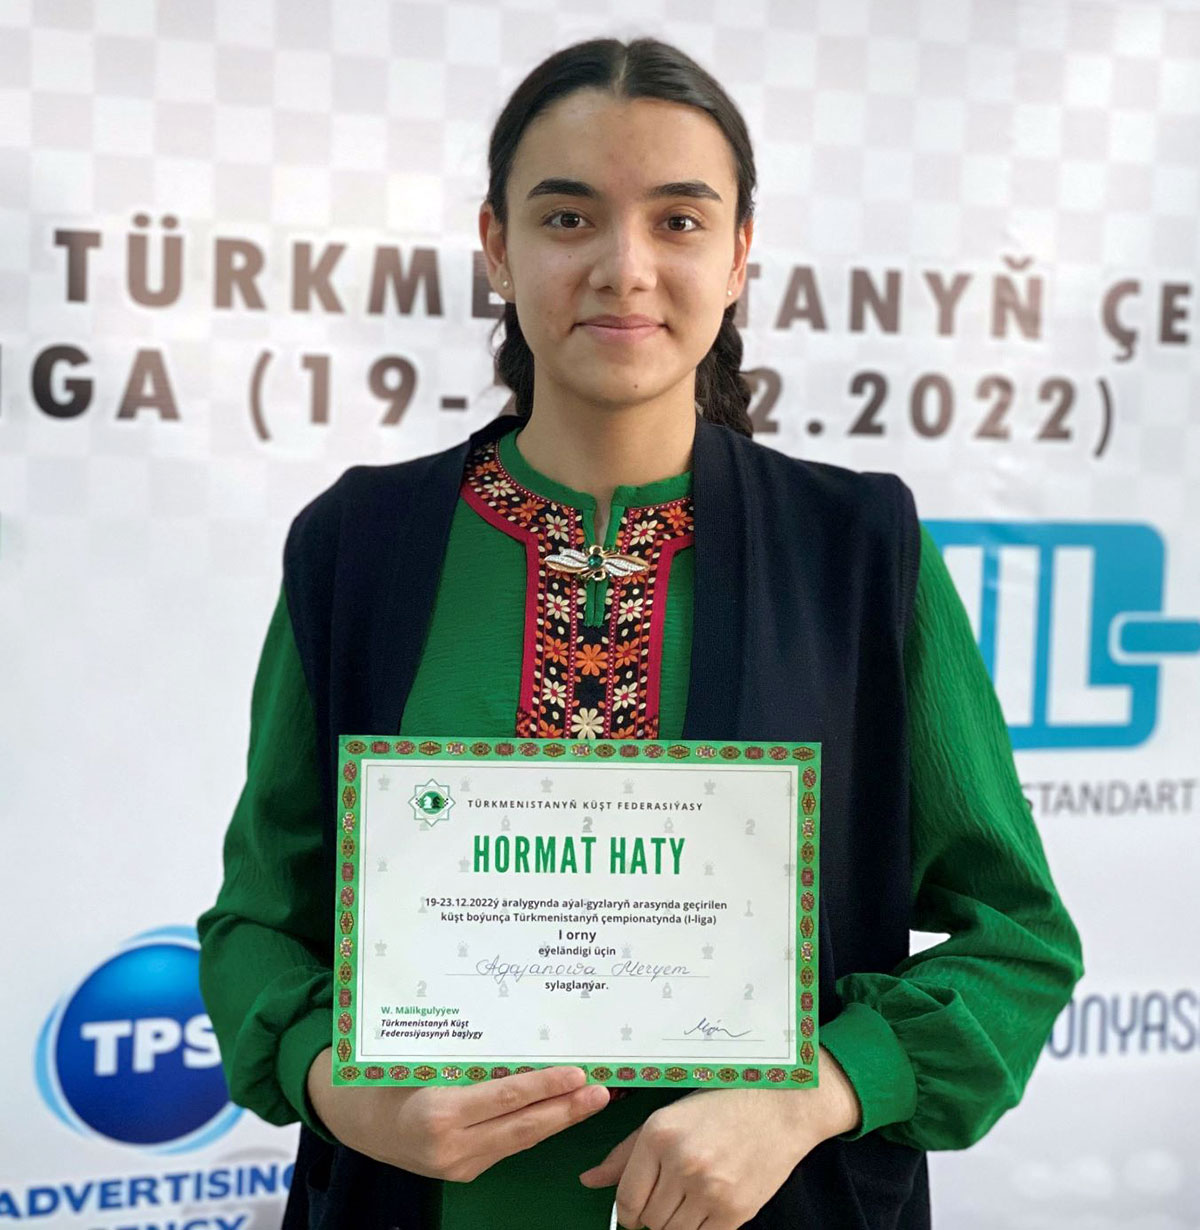 Meryem Agajanova became the champion of Turkmenistan in chess among girls under 20